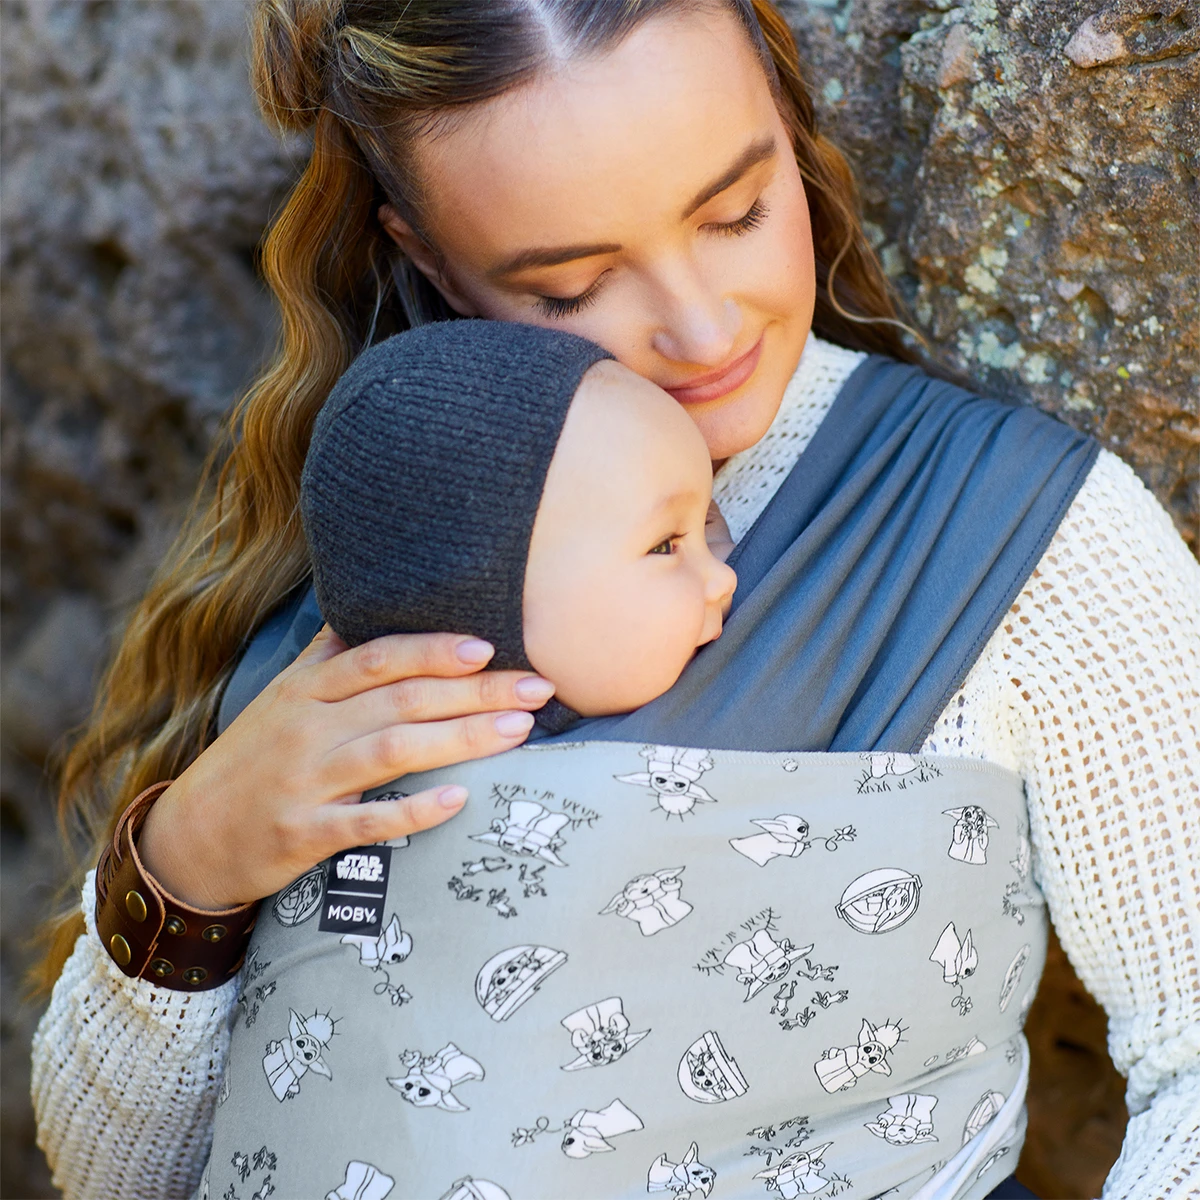 Mom wearing baby in Easy-Wrap Carrier in Grogu’s Galaxy